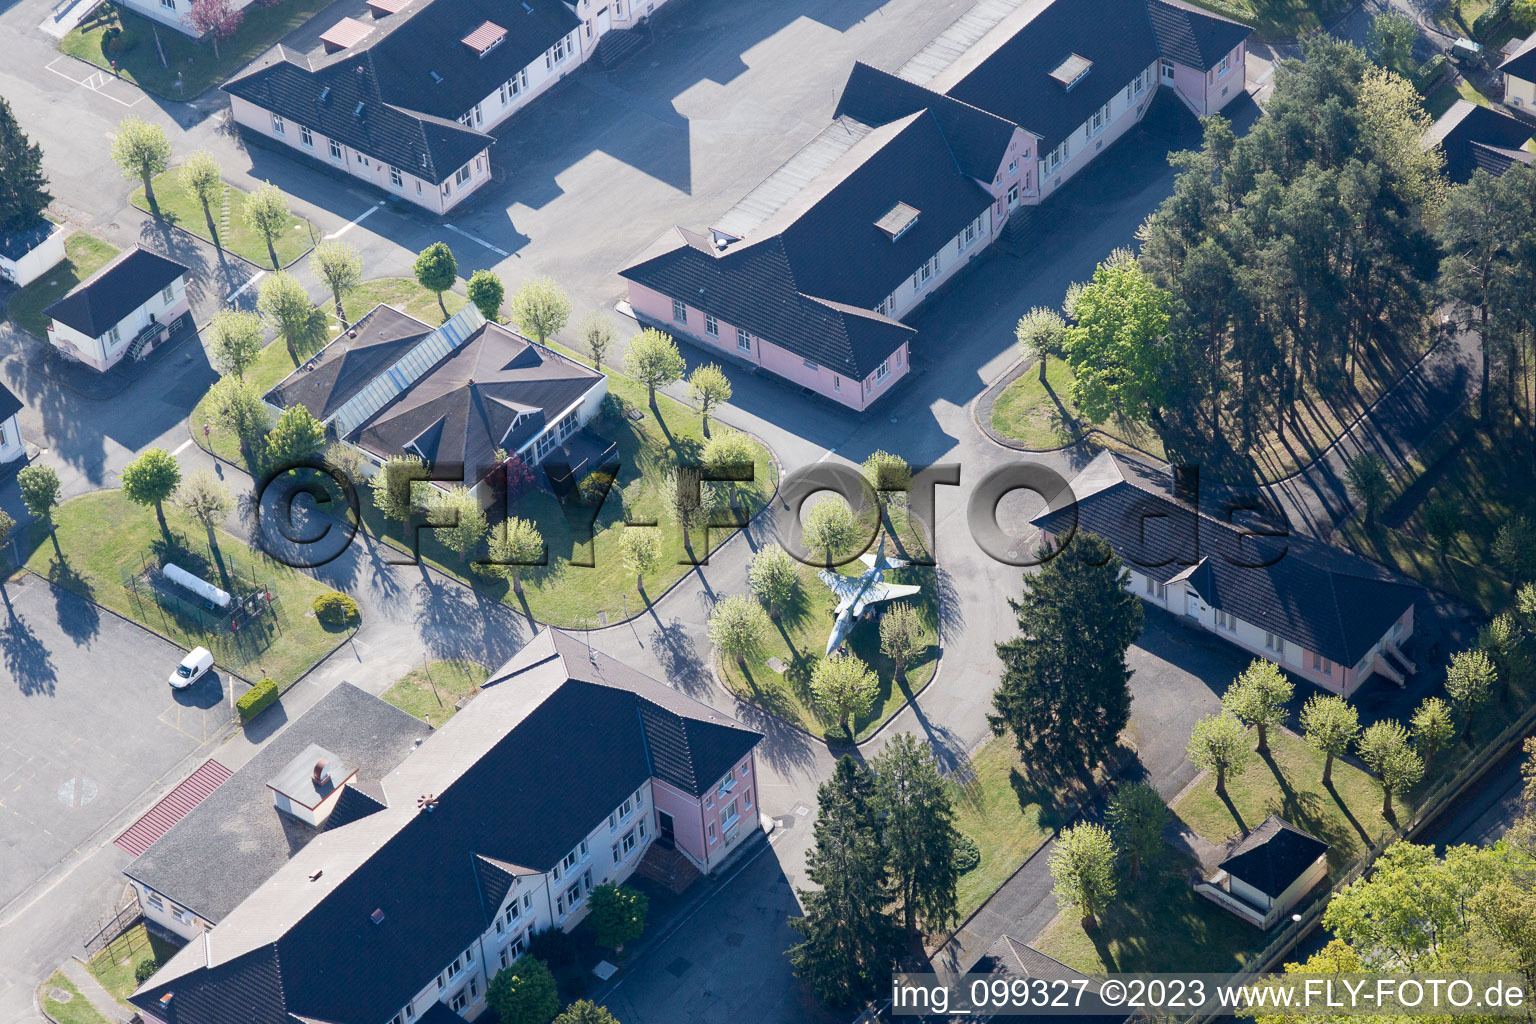 Drone image of Drachenbronn-Birlenbach in the state Bas-Rhin, France